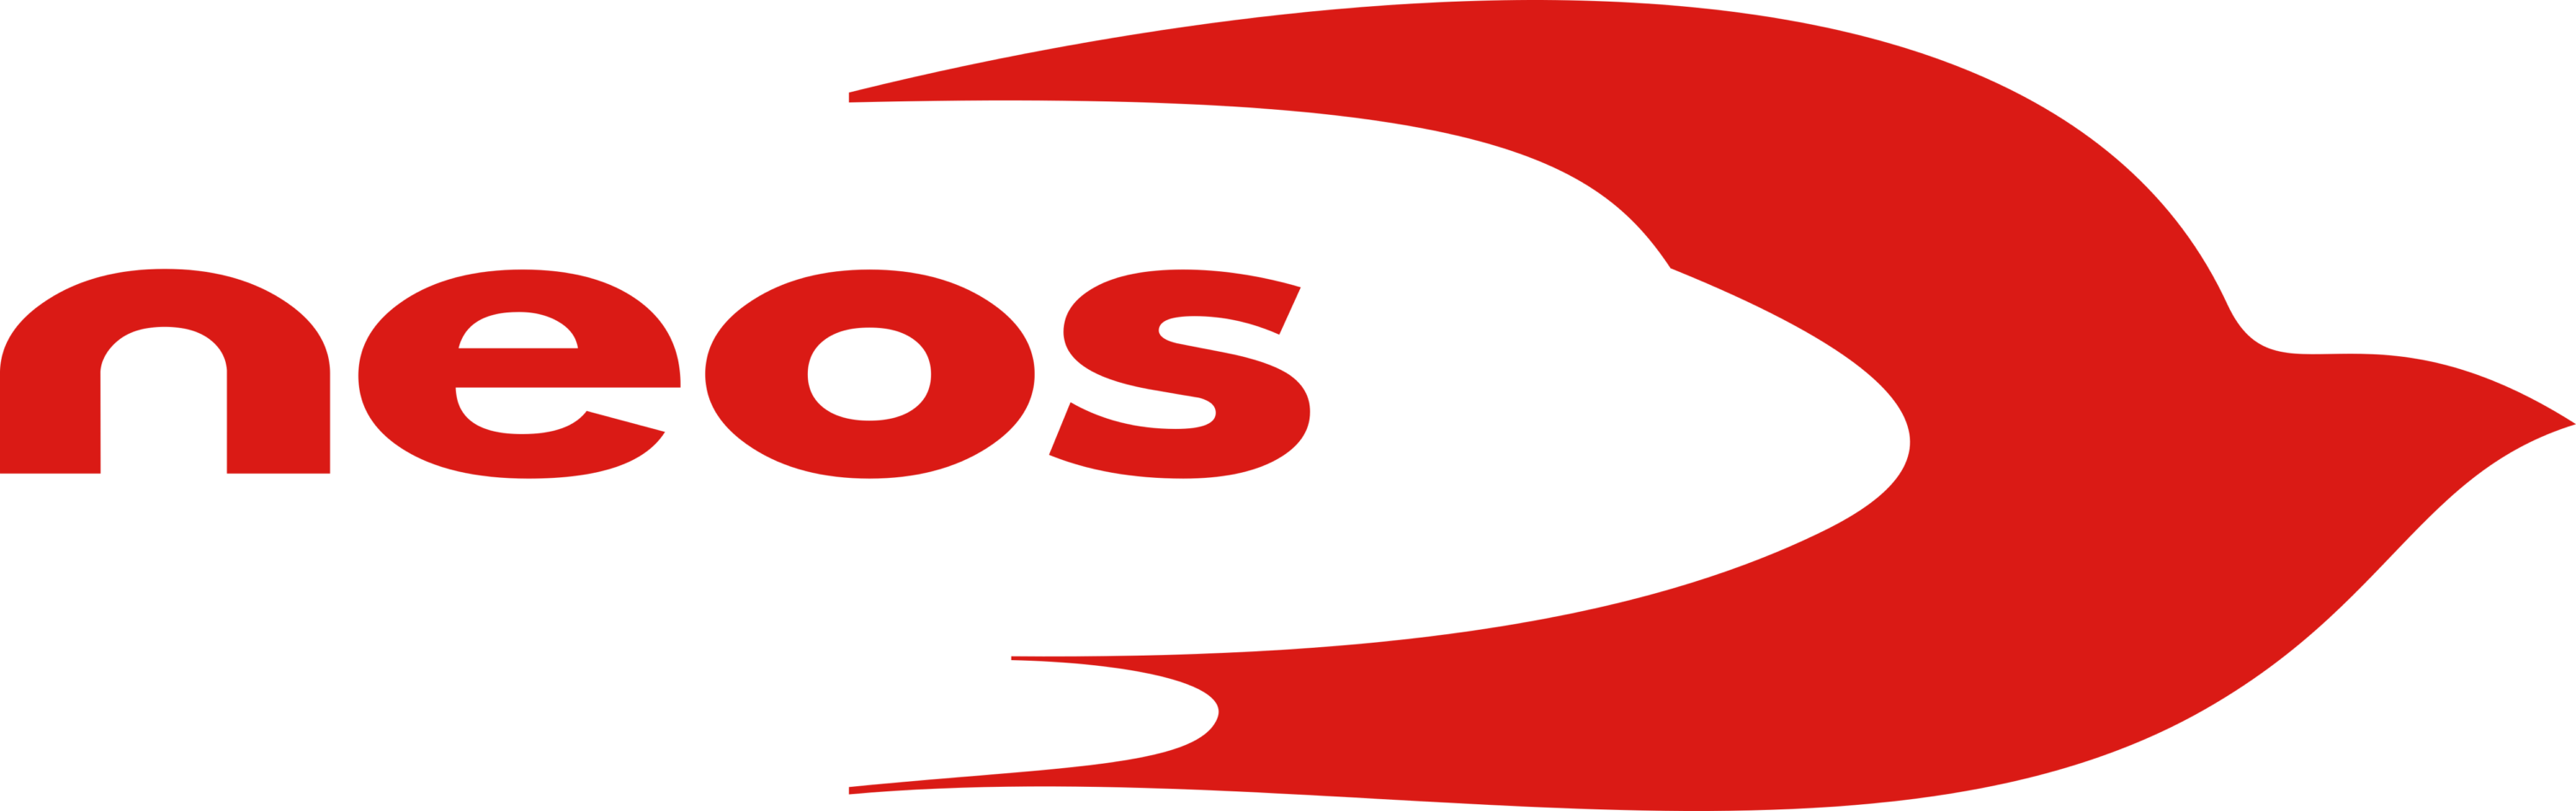 Neos (airline) Logo